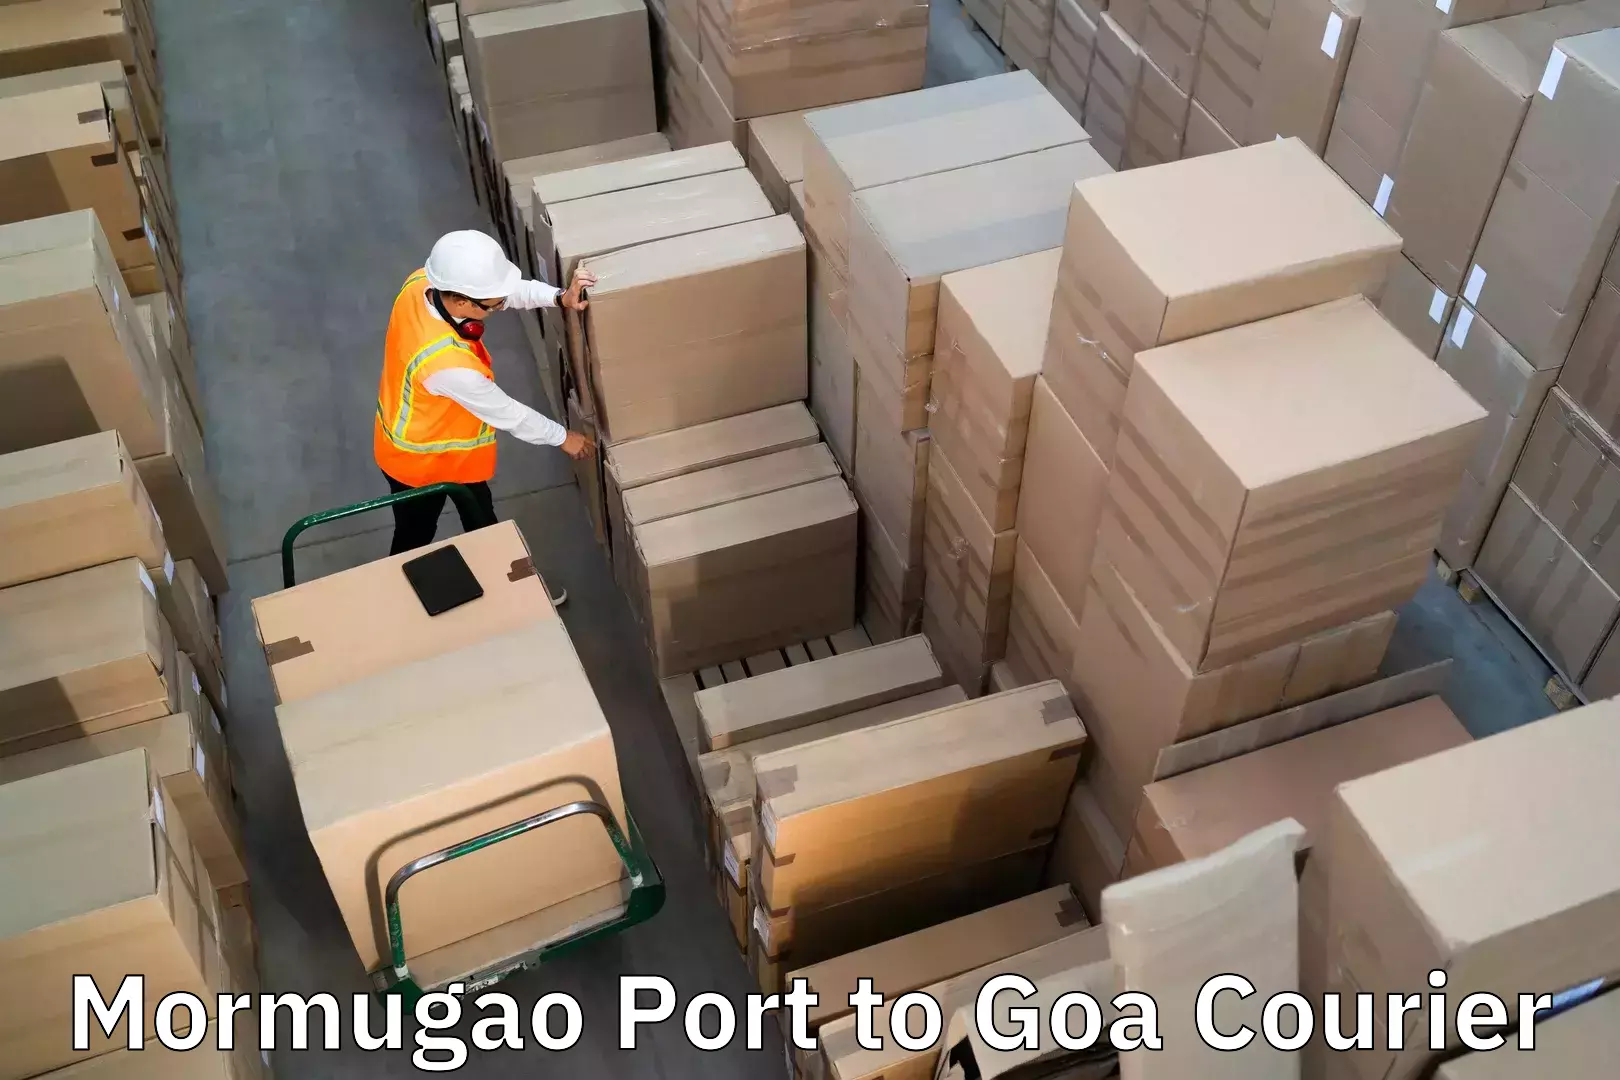 Luggage shipping specialists Mormugao Port to South Goa